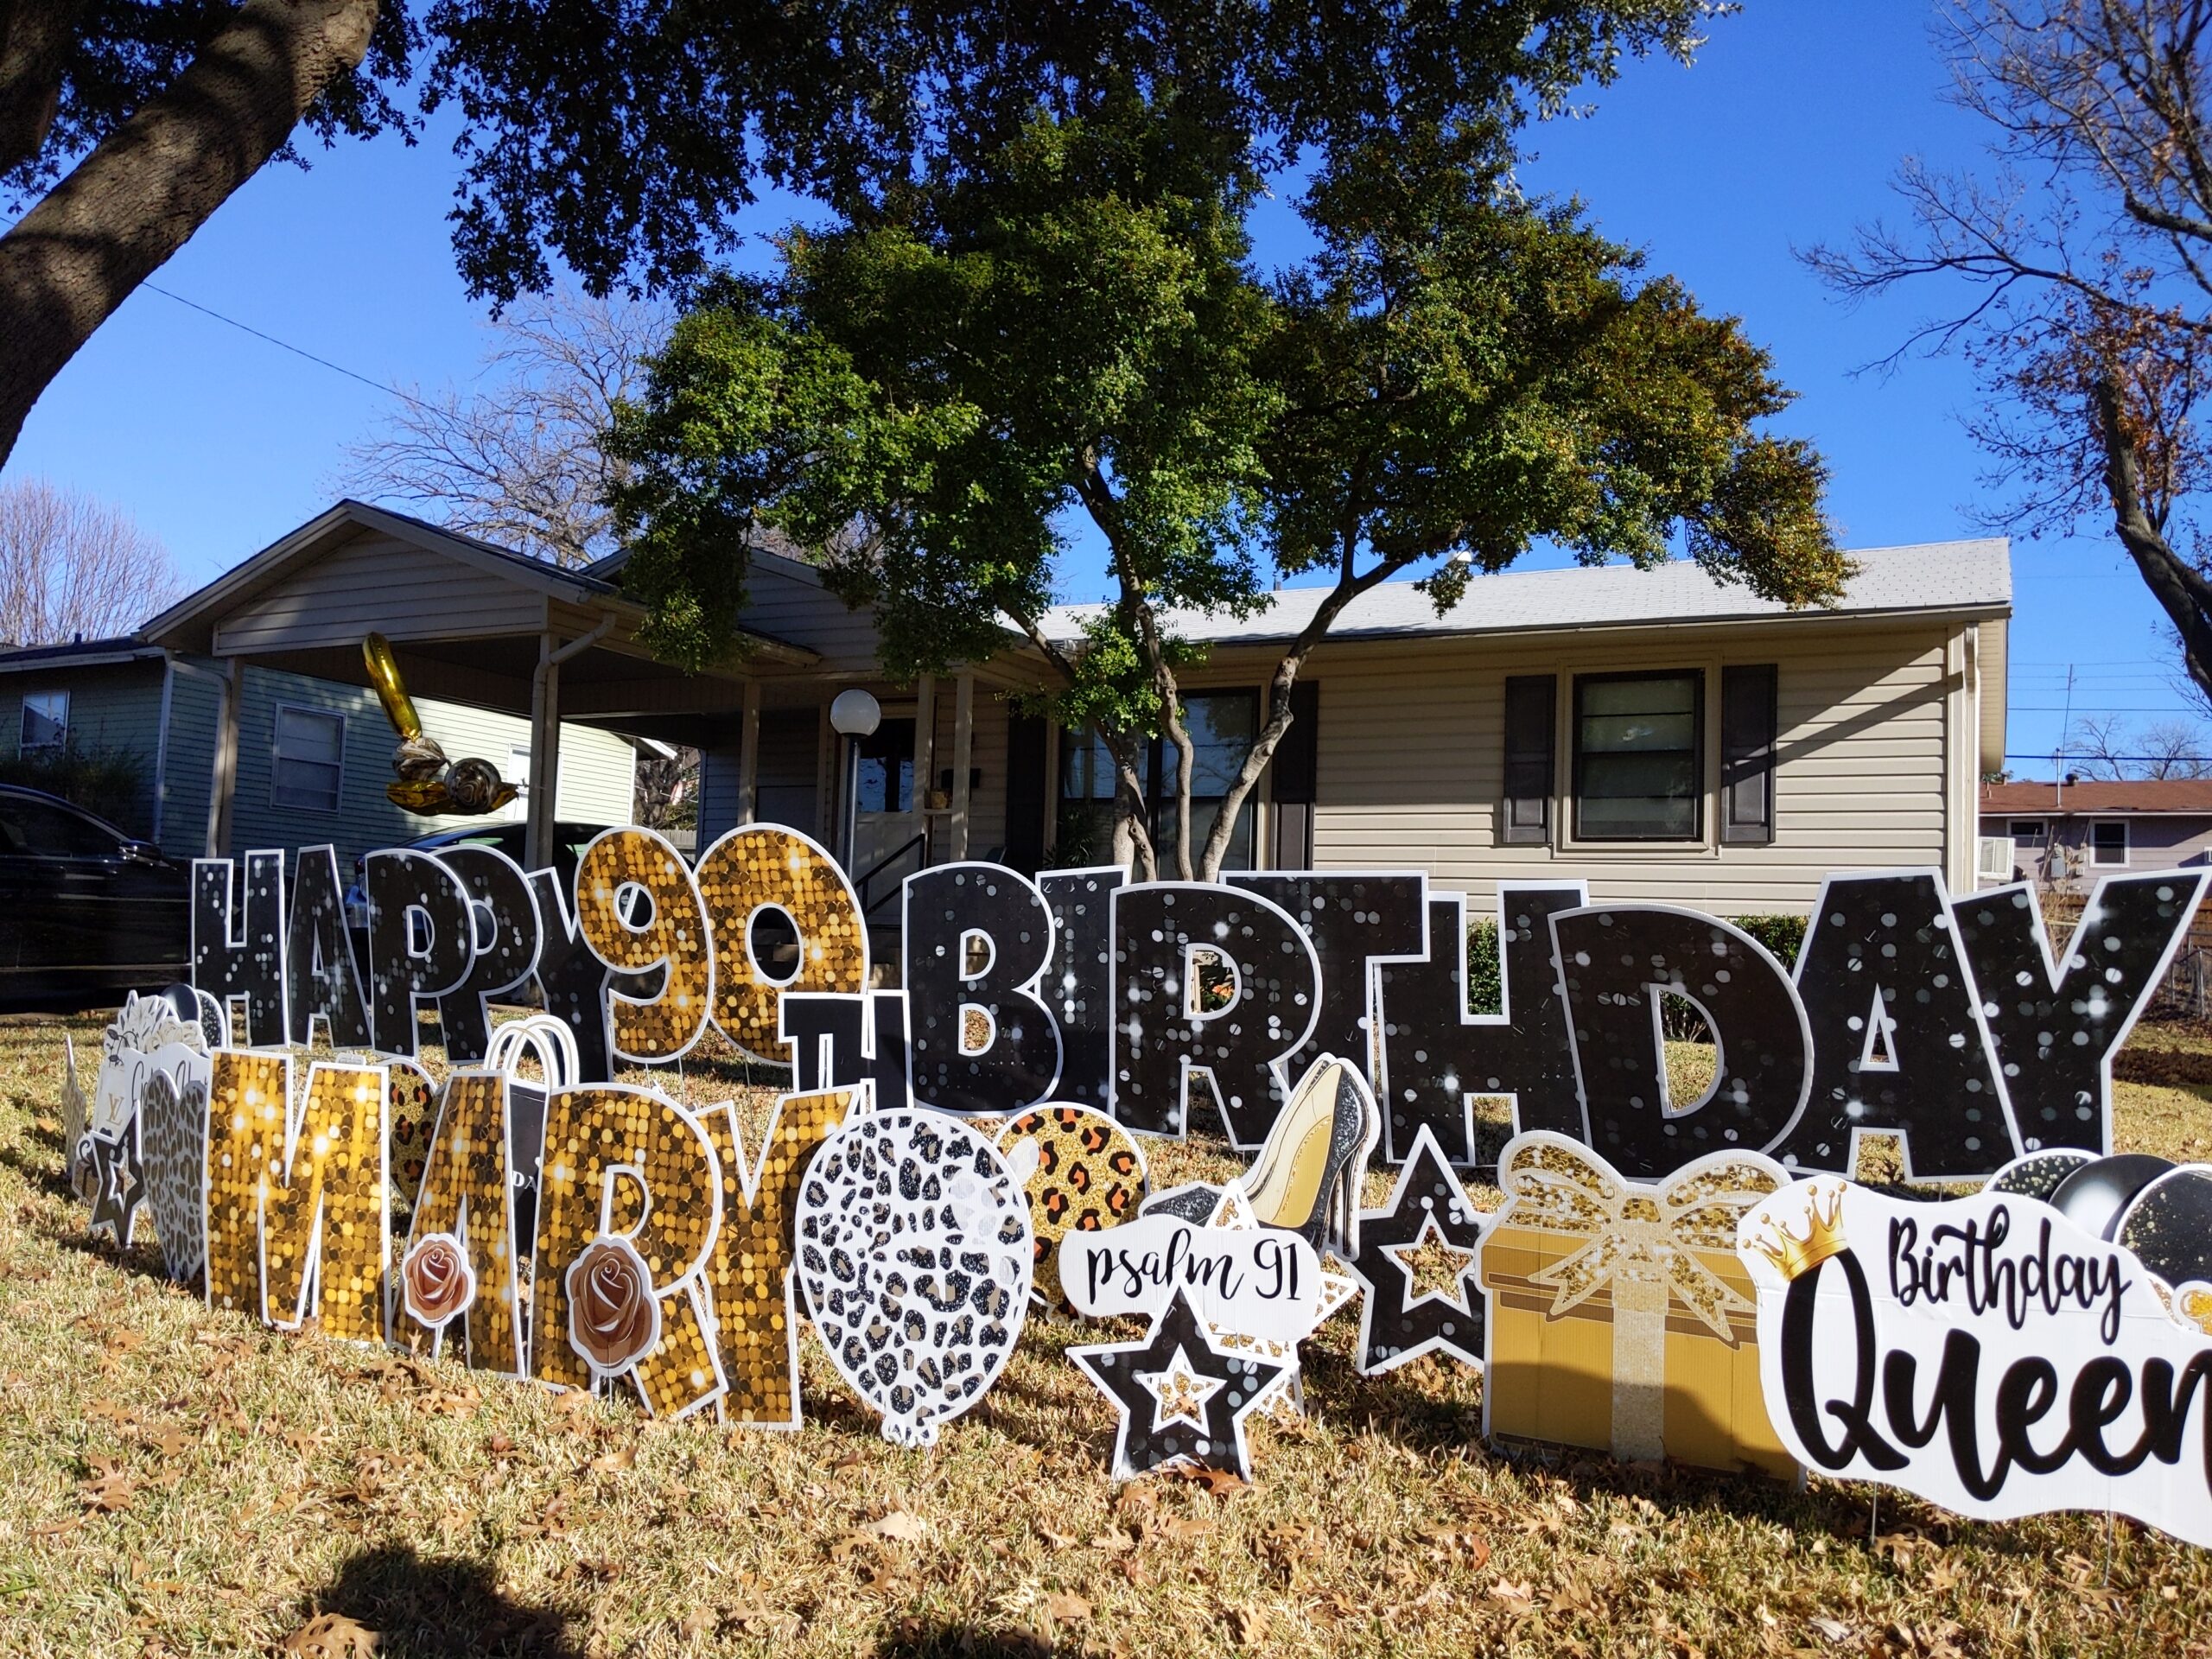 Hamilton Park Neighborhood Celebrates Long Time Resident with Drive-By Birthday Celebration